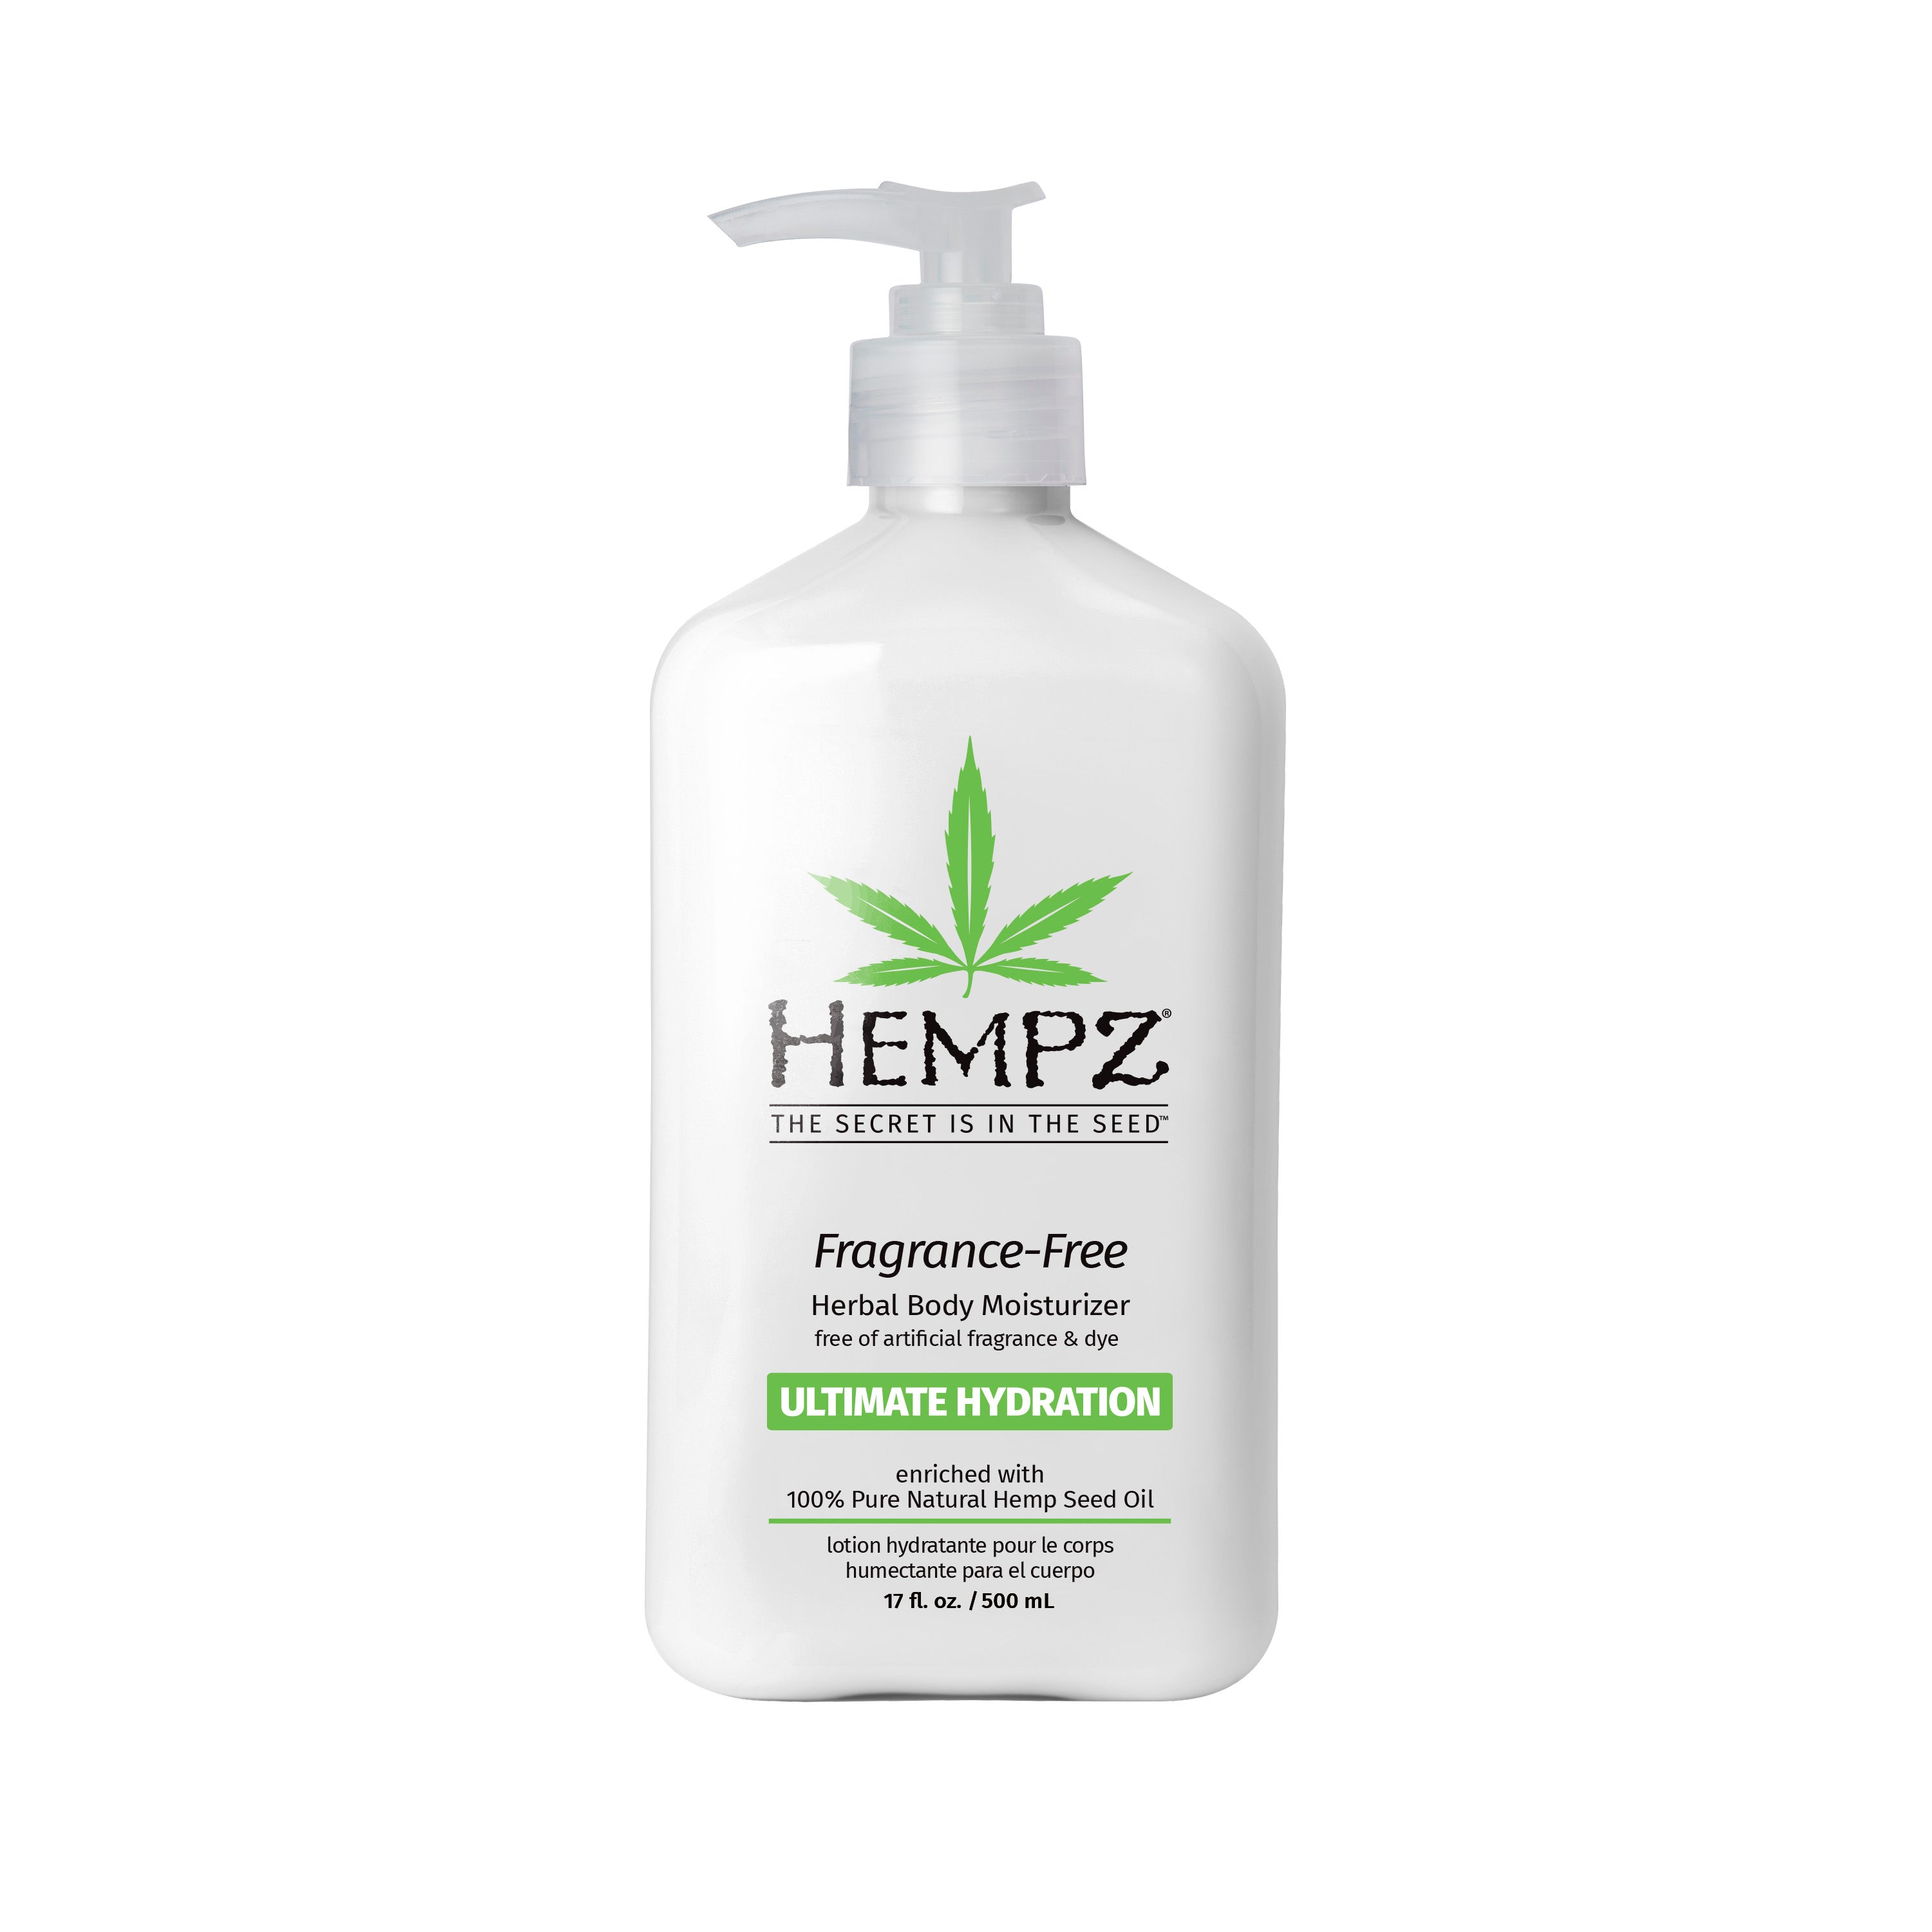 Hempz - Fragrance-Free Herbal Body Moisturizer - Creata Beauty - Professional Beauty Products